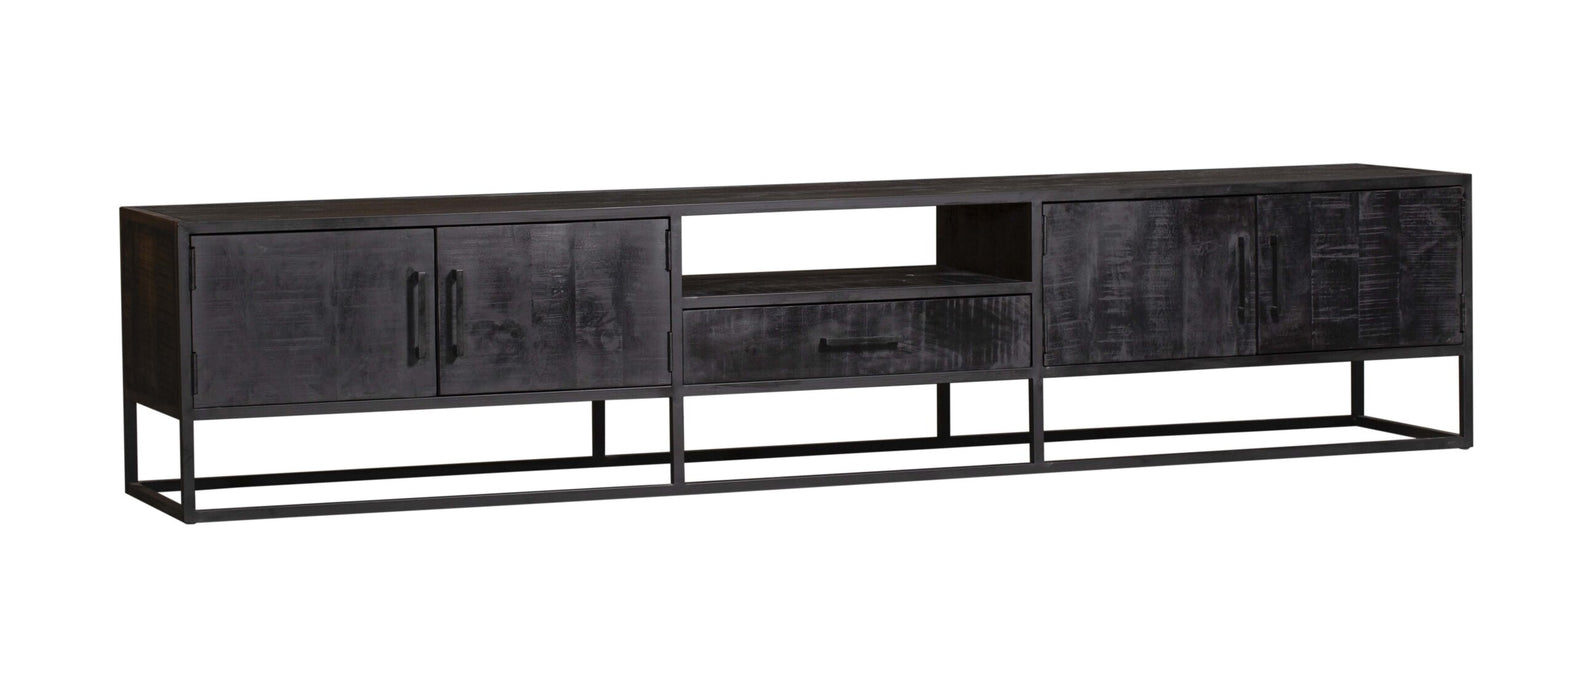 Tv meubel Denver Black 240 cm | Mangohout en staal - Industrieelinhuis.nl